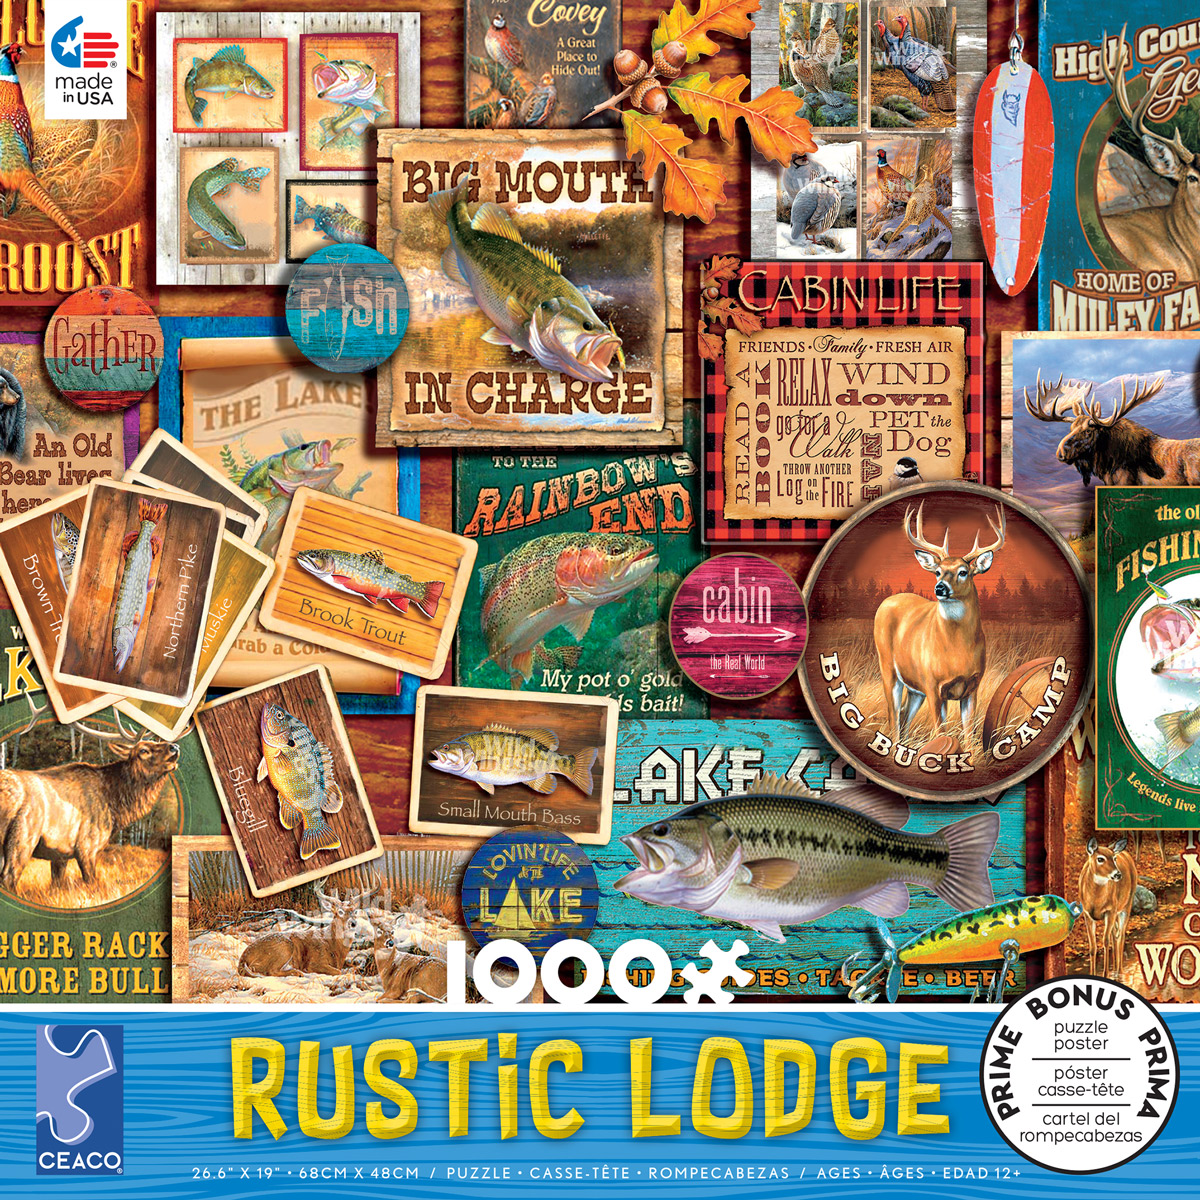 Rustic Lodge Fish and Game